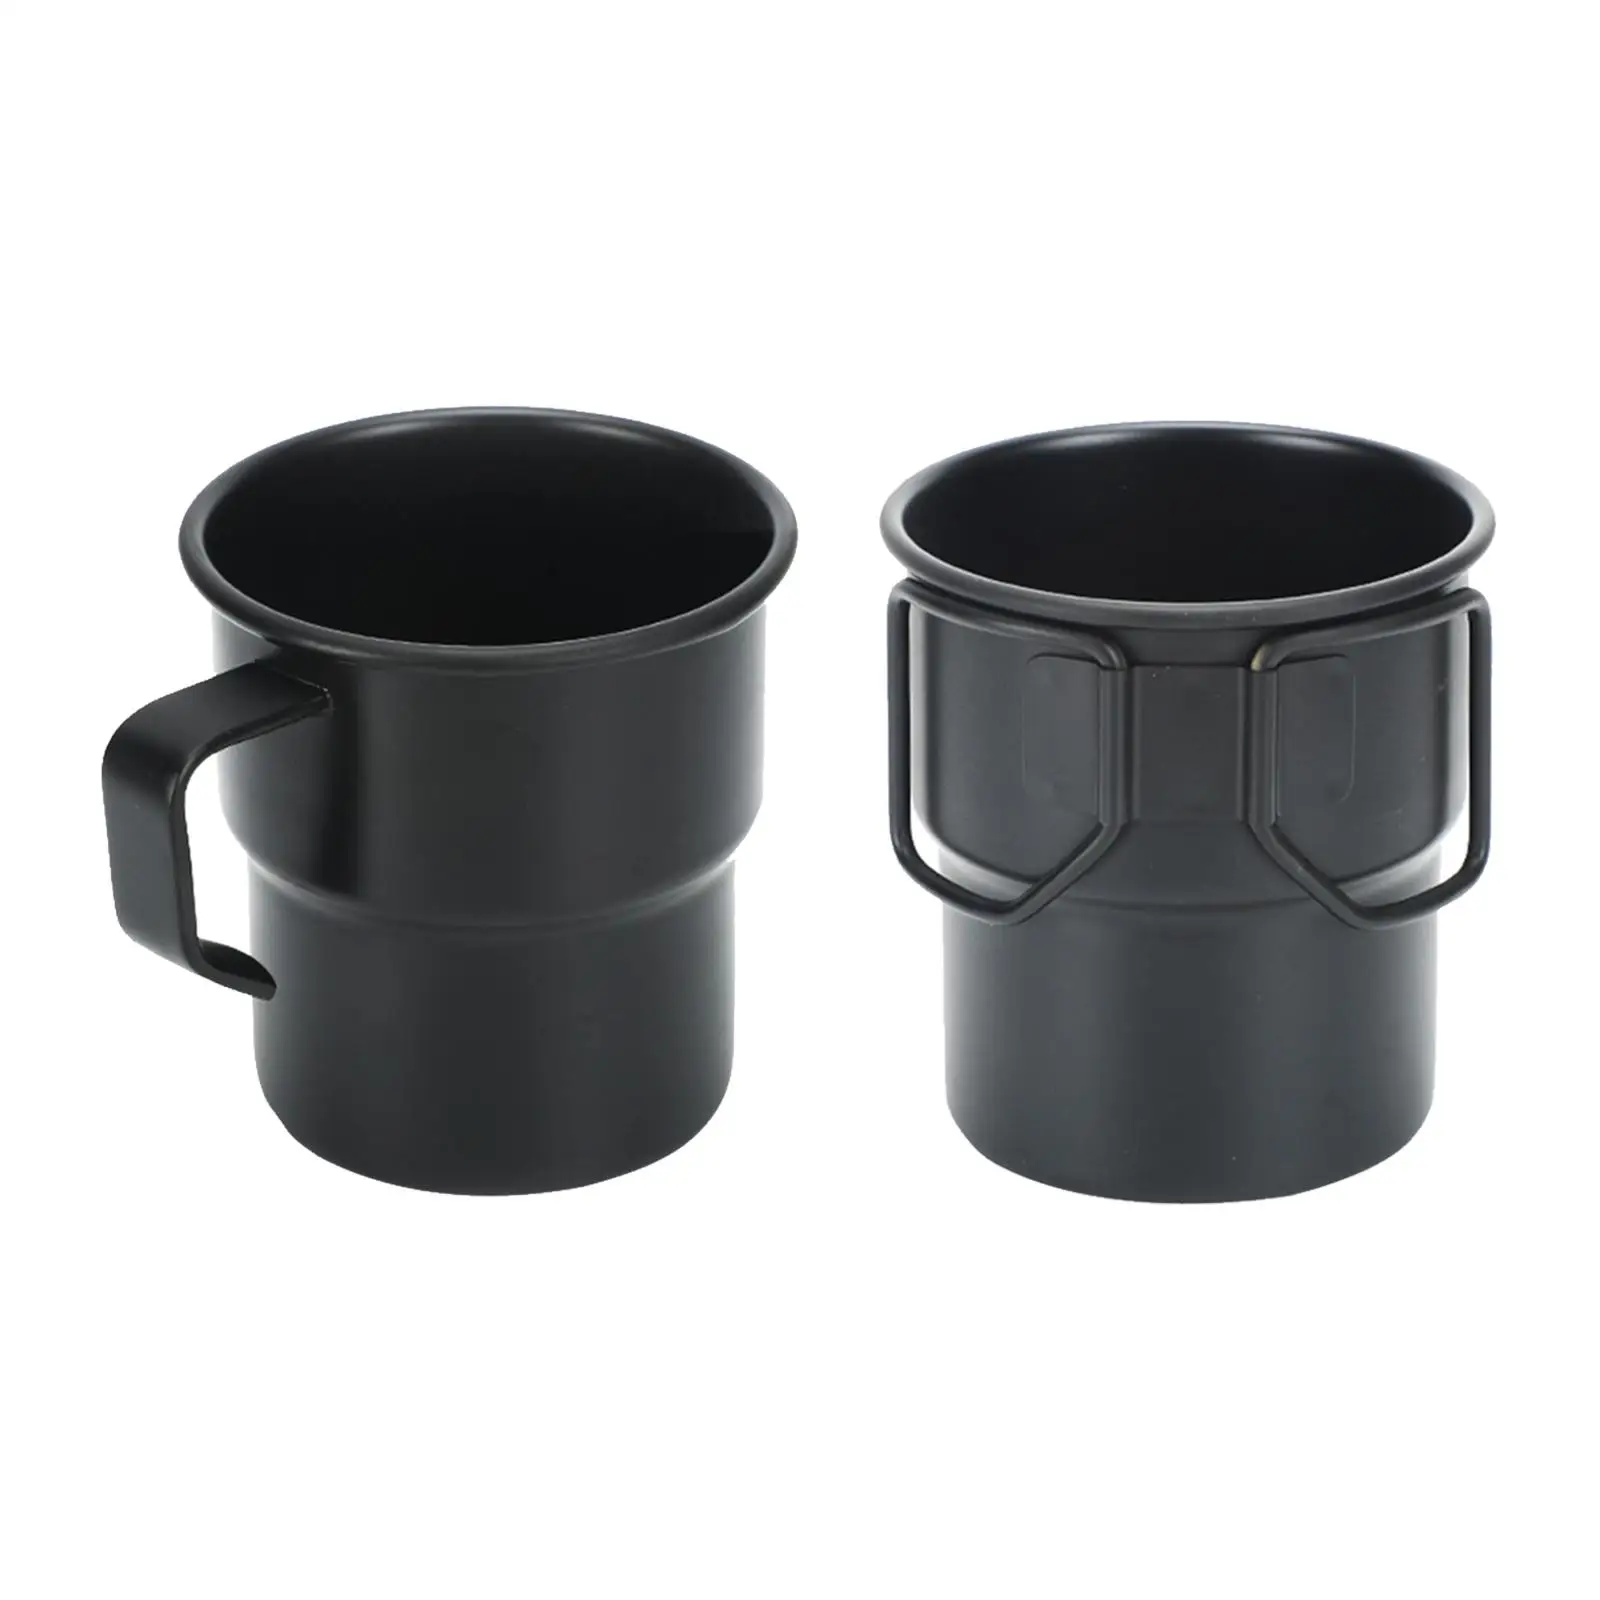 Portable Outdoor Tea Coffee Mug Cookware Camping Cup for Beach Kitchen Picnic Barbecue